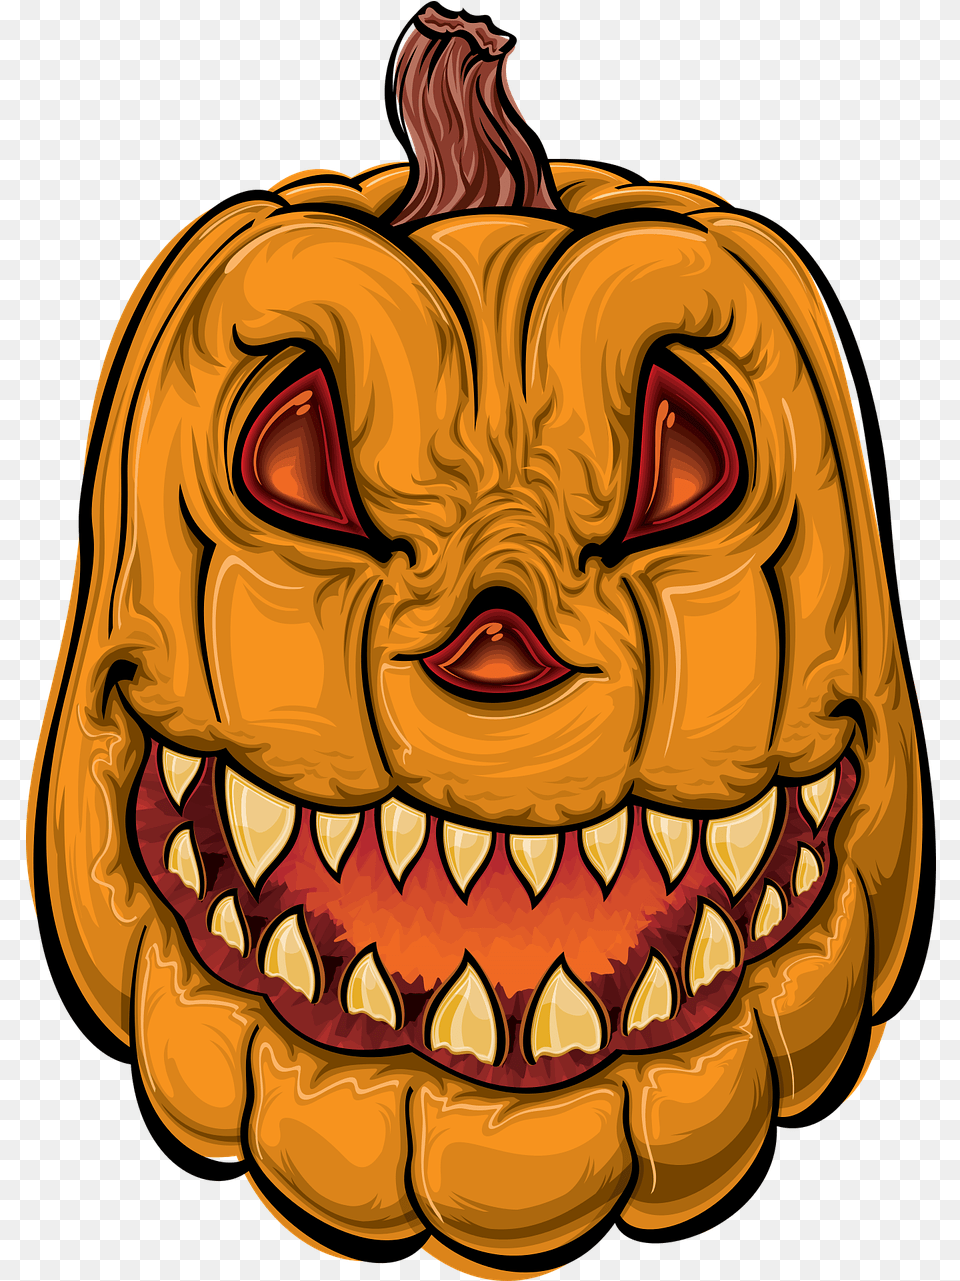 Pumpkin Halloween Cartoon Dibujos De Calabazas Fciles, Food, Plant, Produce, Vegetable Png Image